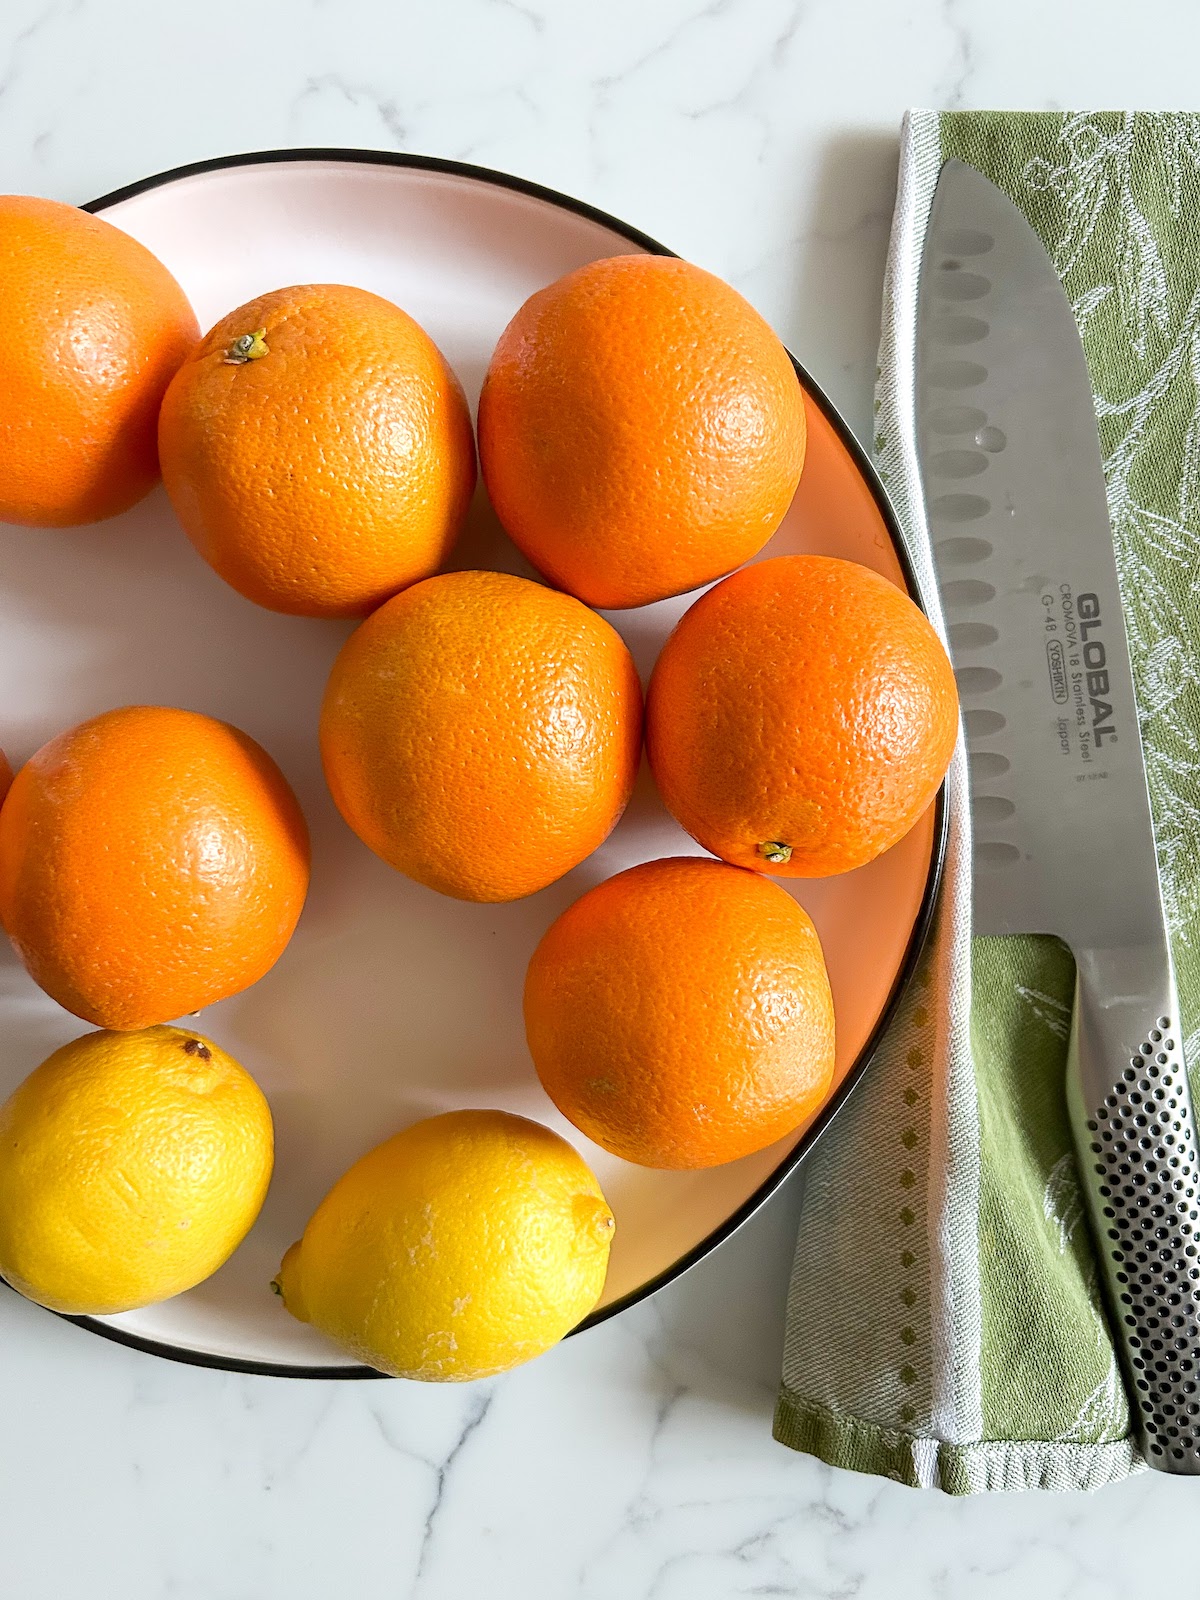 Ingredients for Orange Marmalade